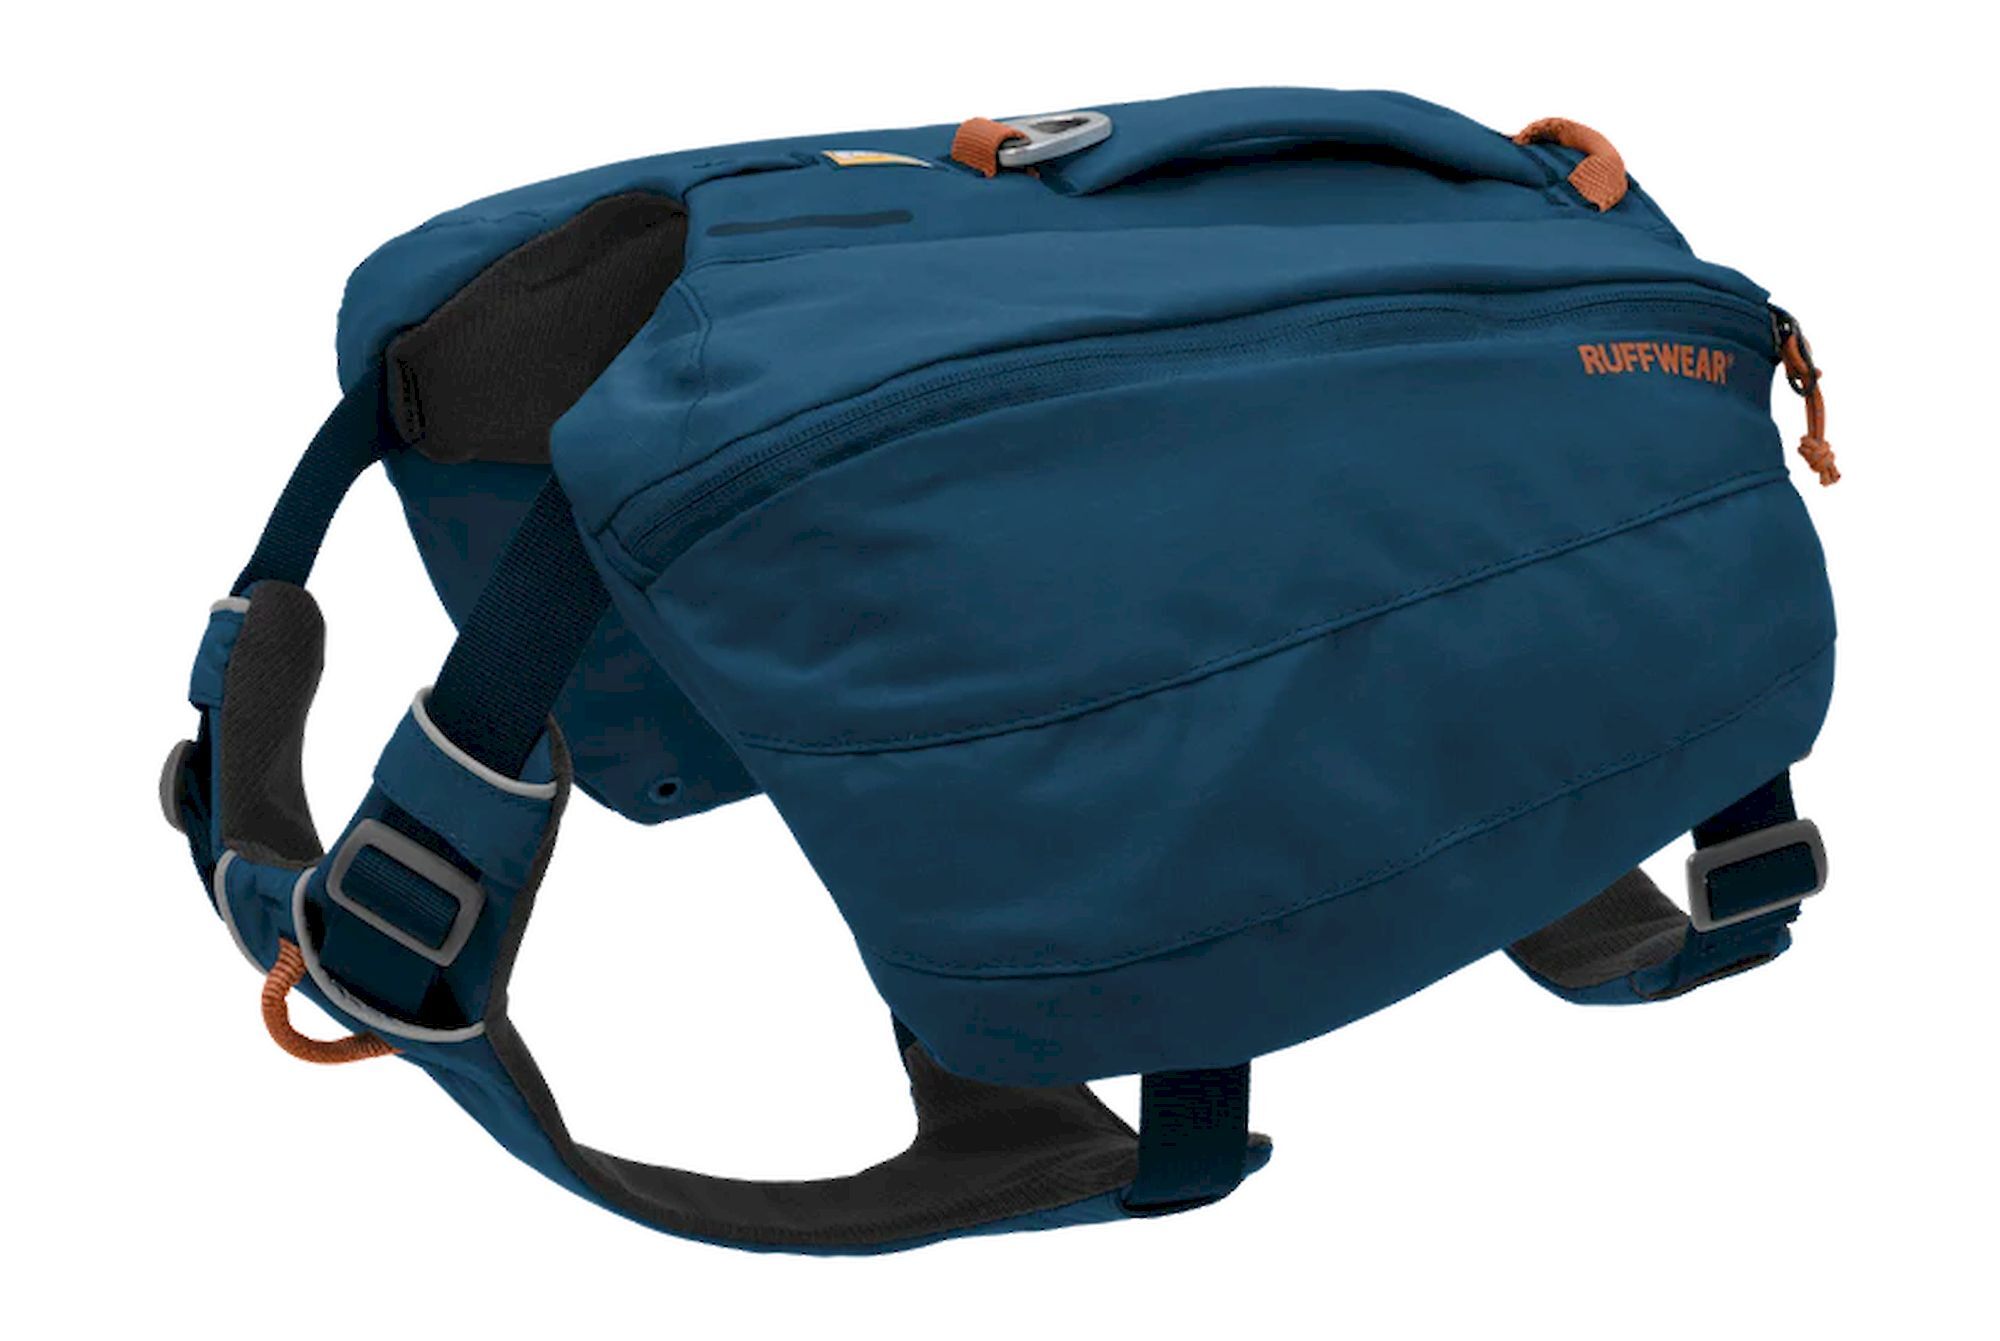 Ruffwear Front Range Day Pack - Dog backpack